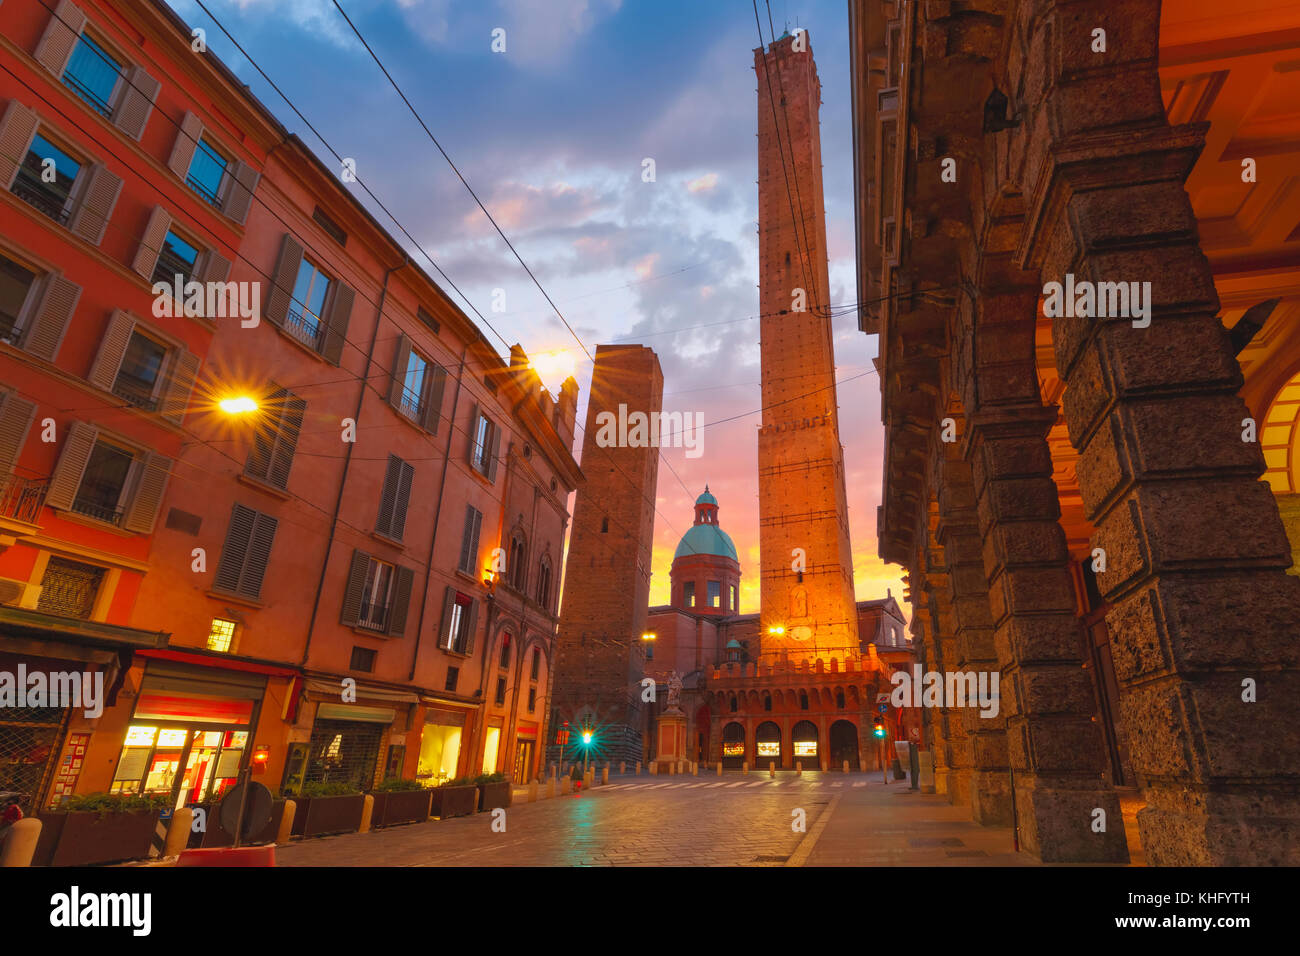 Famosas dos torres de Bolonia, Italia al amanecer. Foto de stock